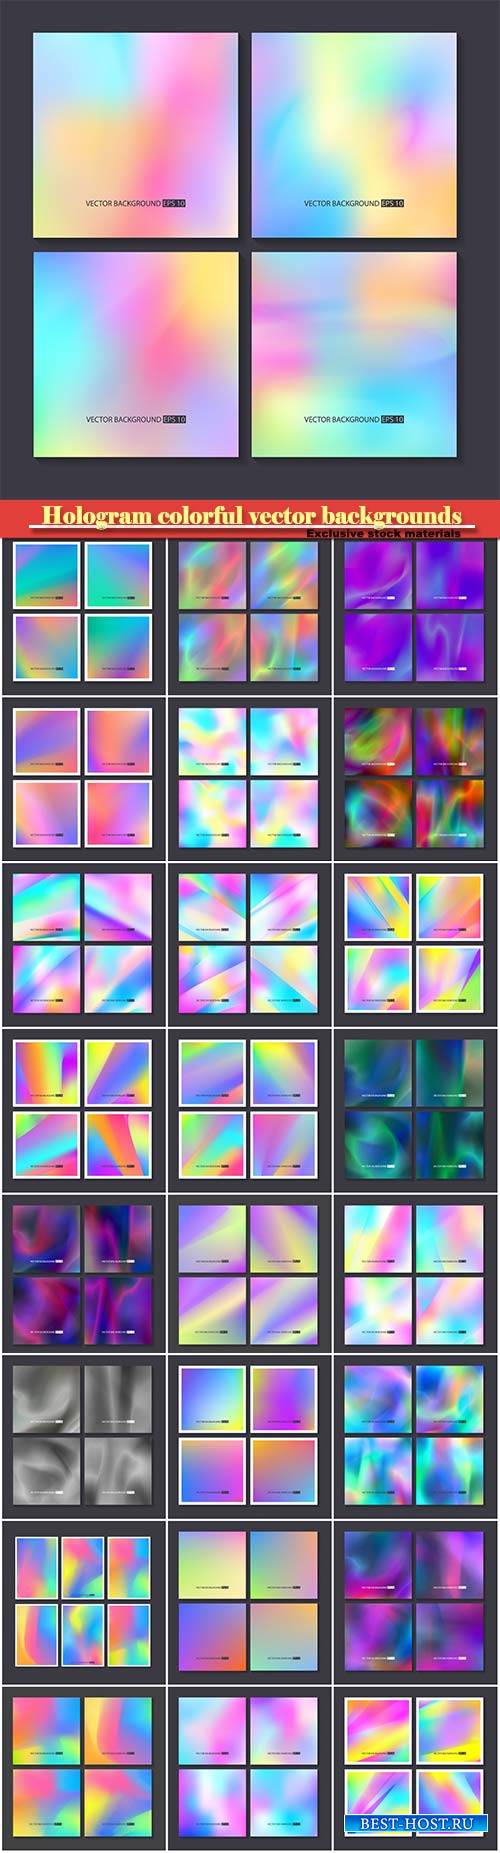 Hologram bright colorful vector backgrounds set, design for greeting card